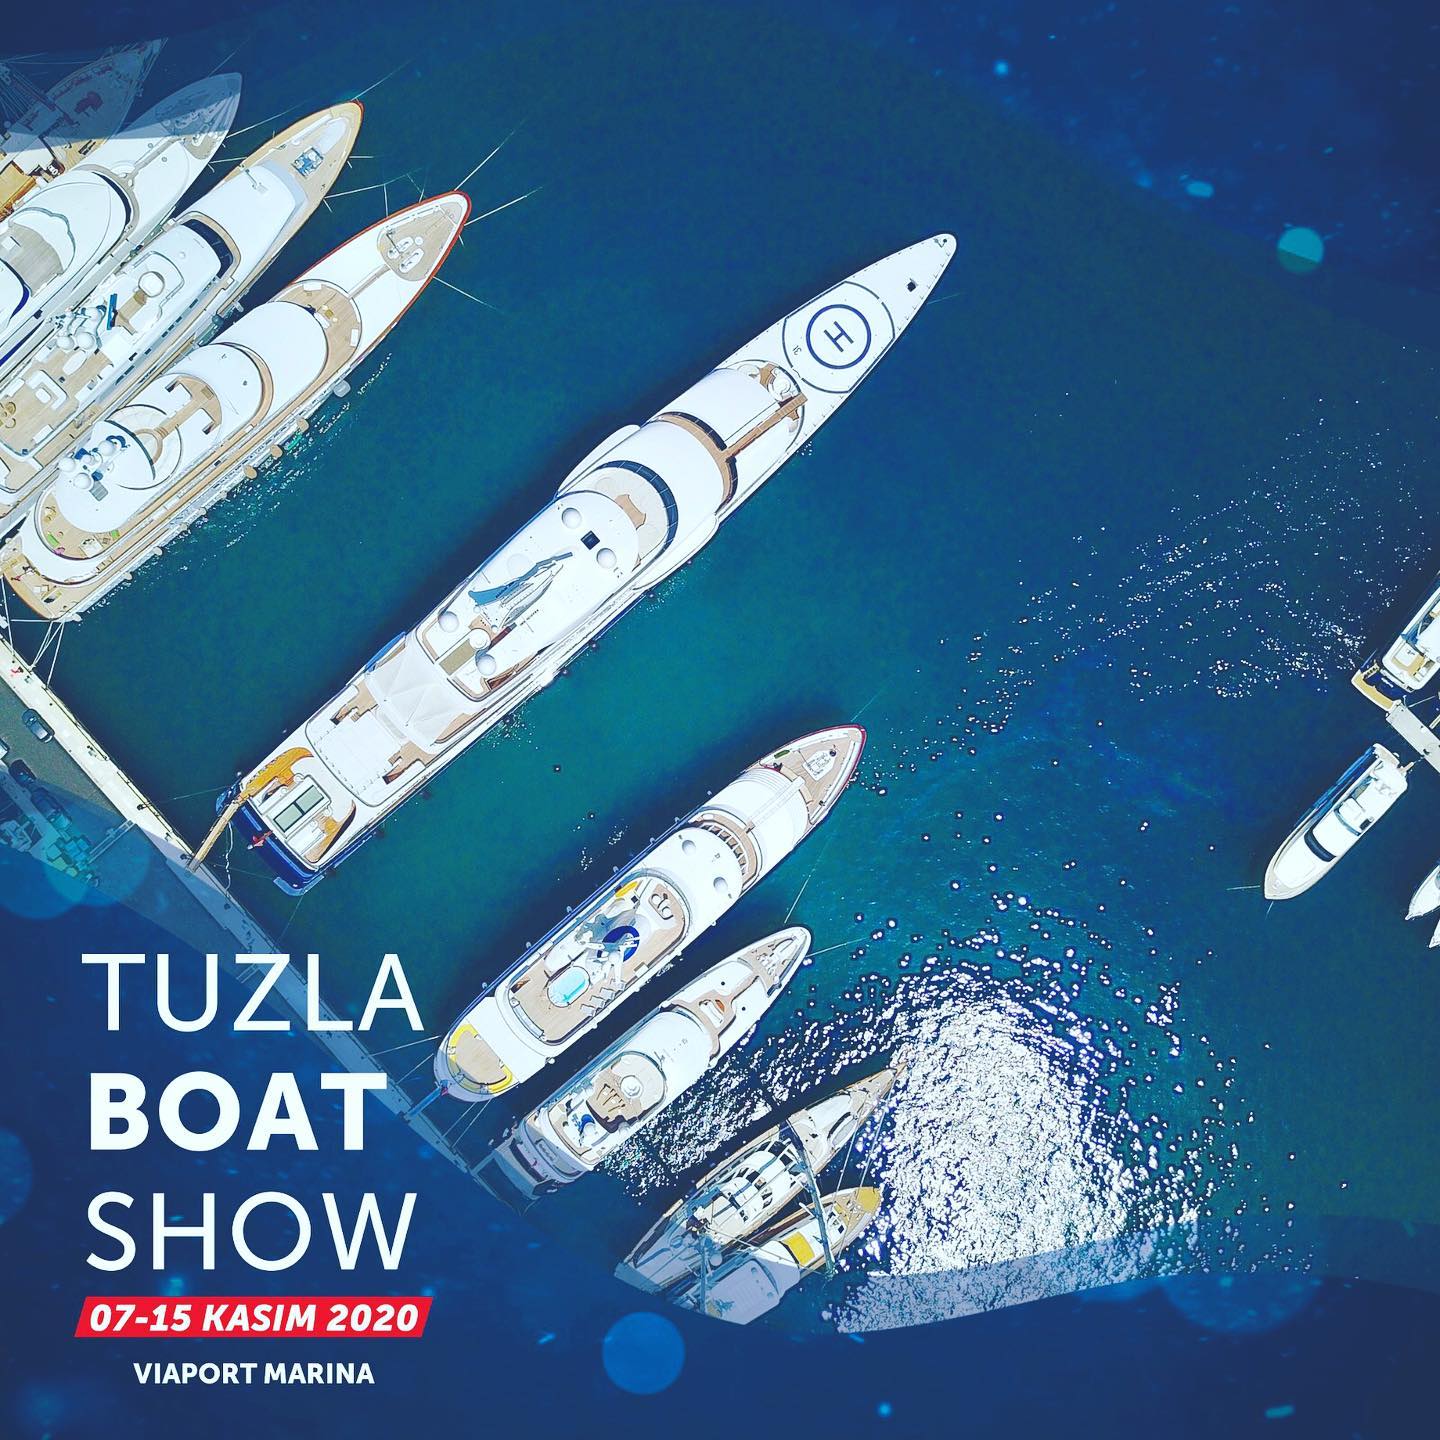 Tuzla Boat Show